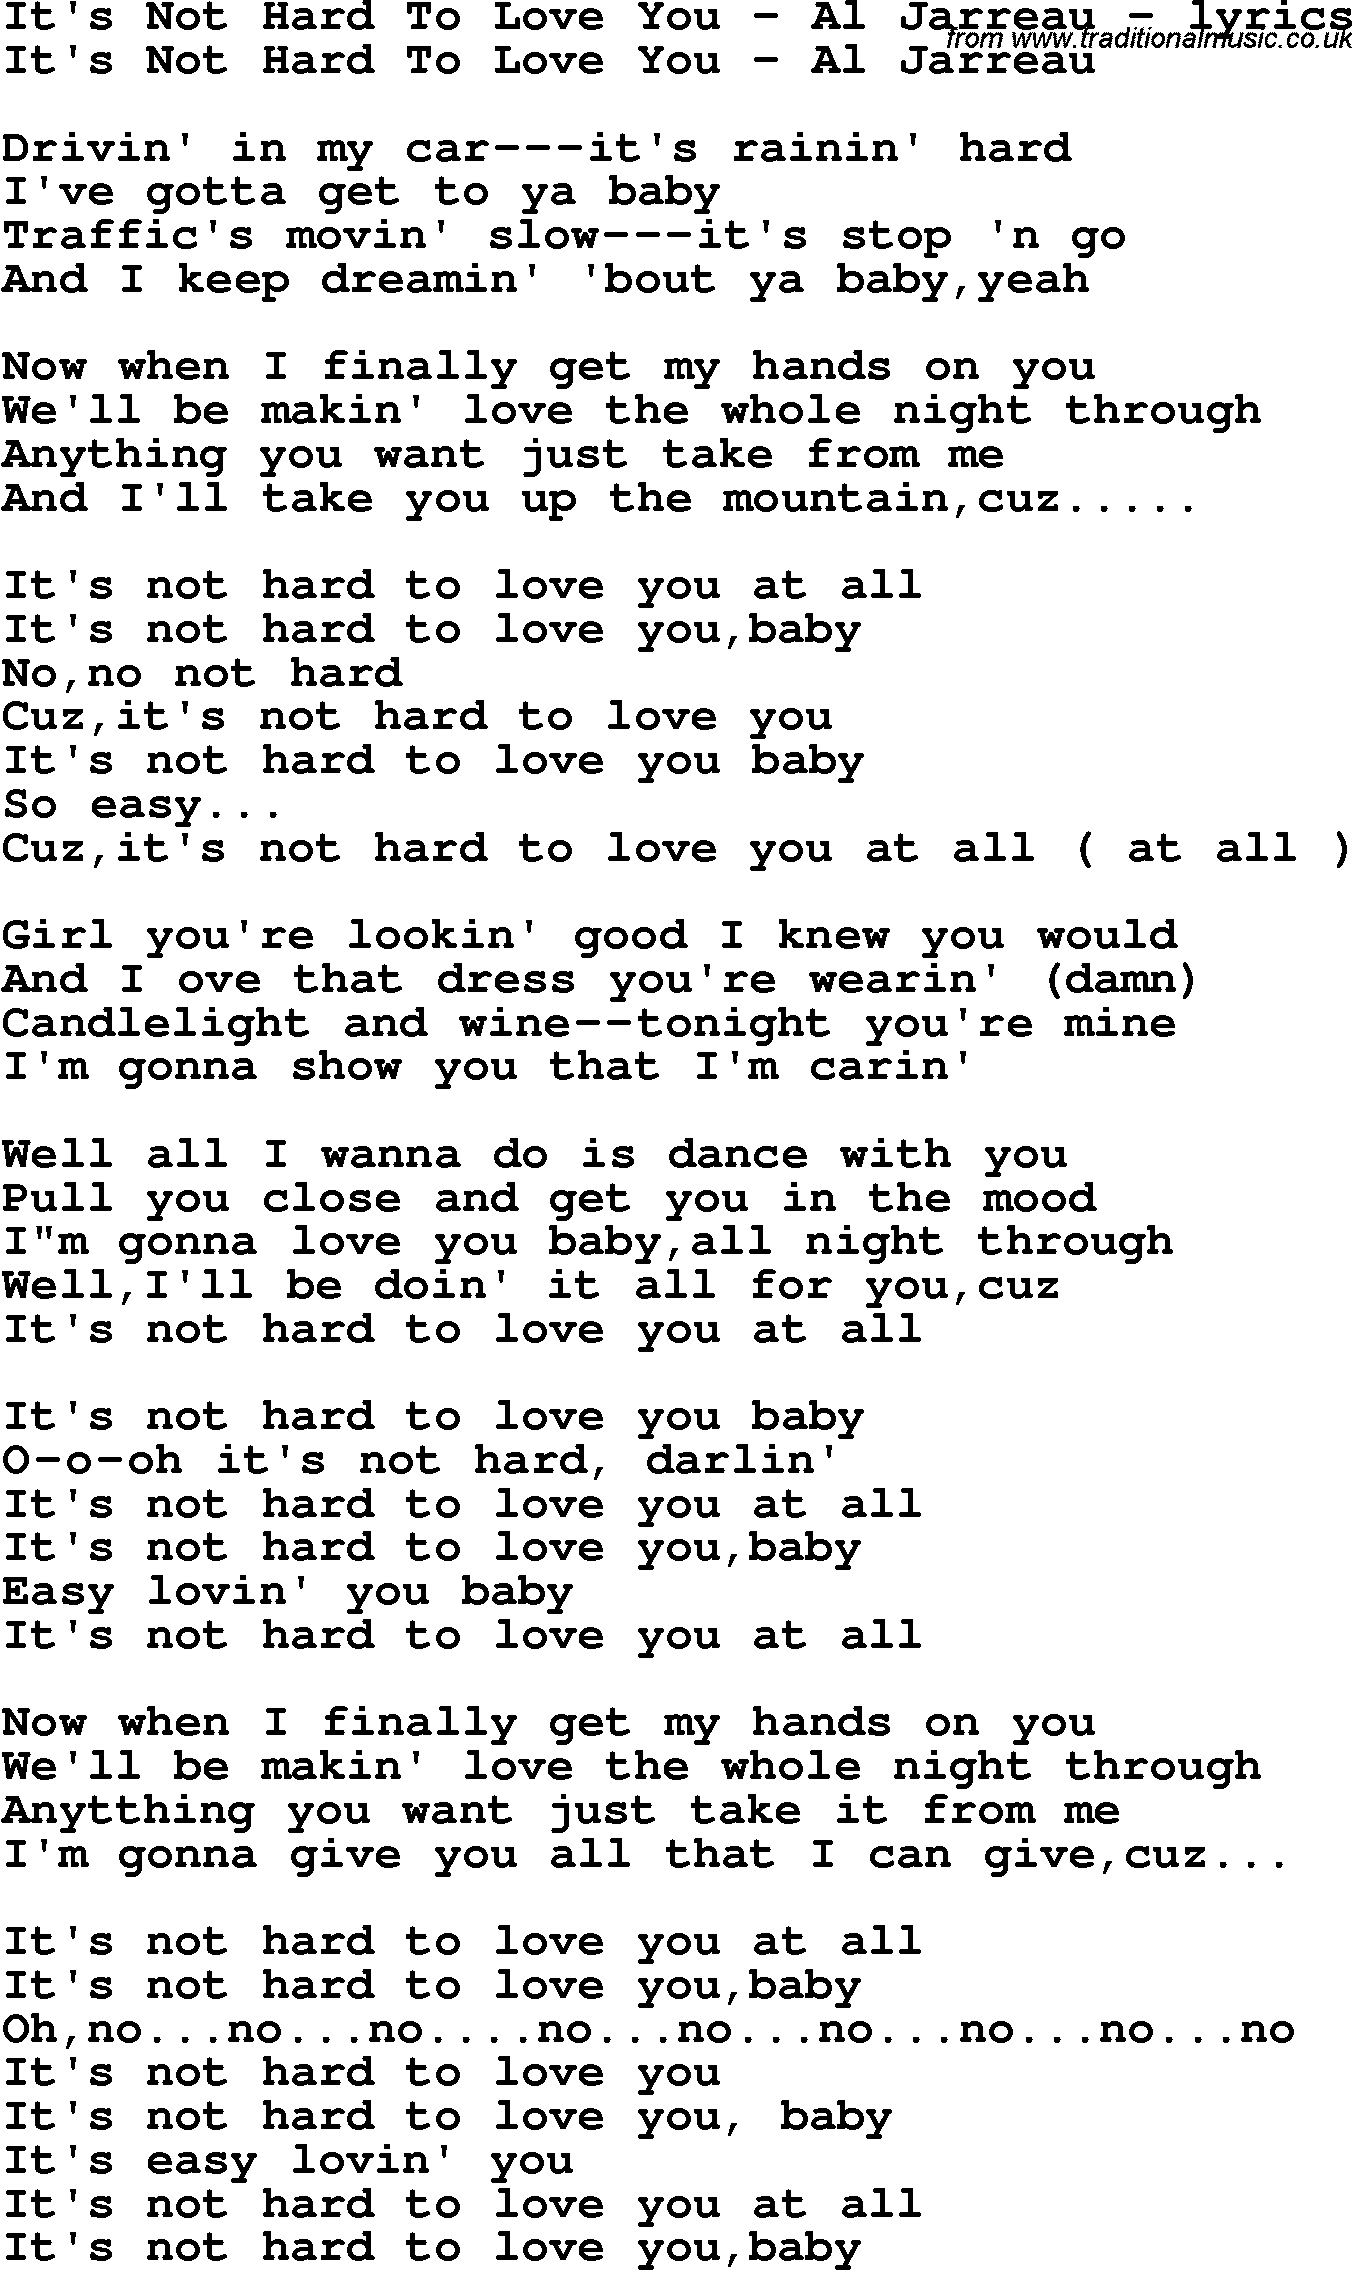 Love Song Lyrics for: It's Not Hard To Love You - Al Jarreau